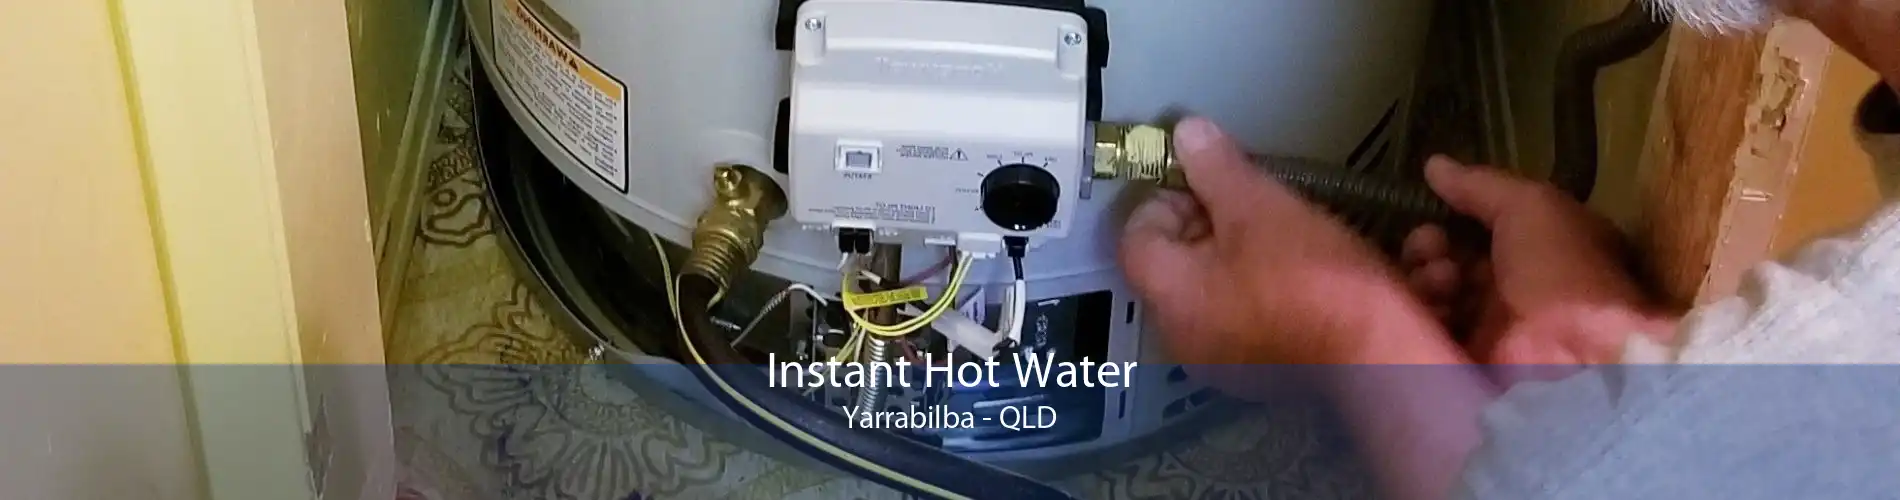 Instant Hot Water Yarrabilba - QLD